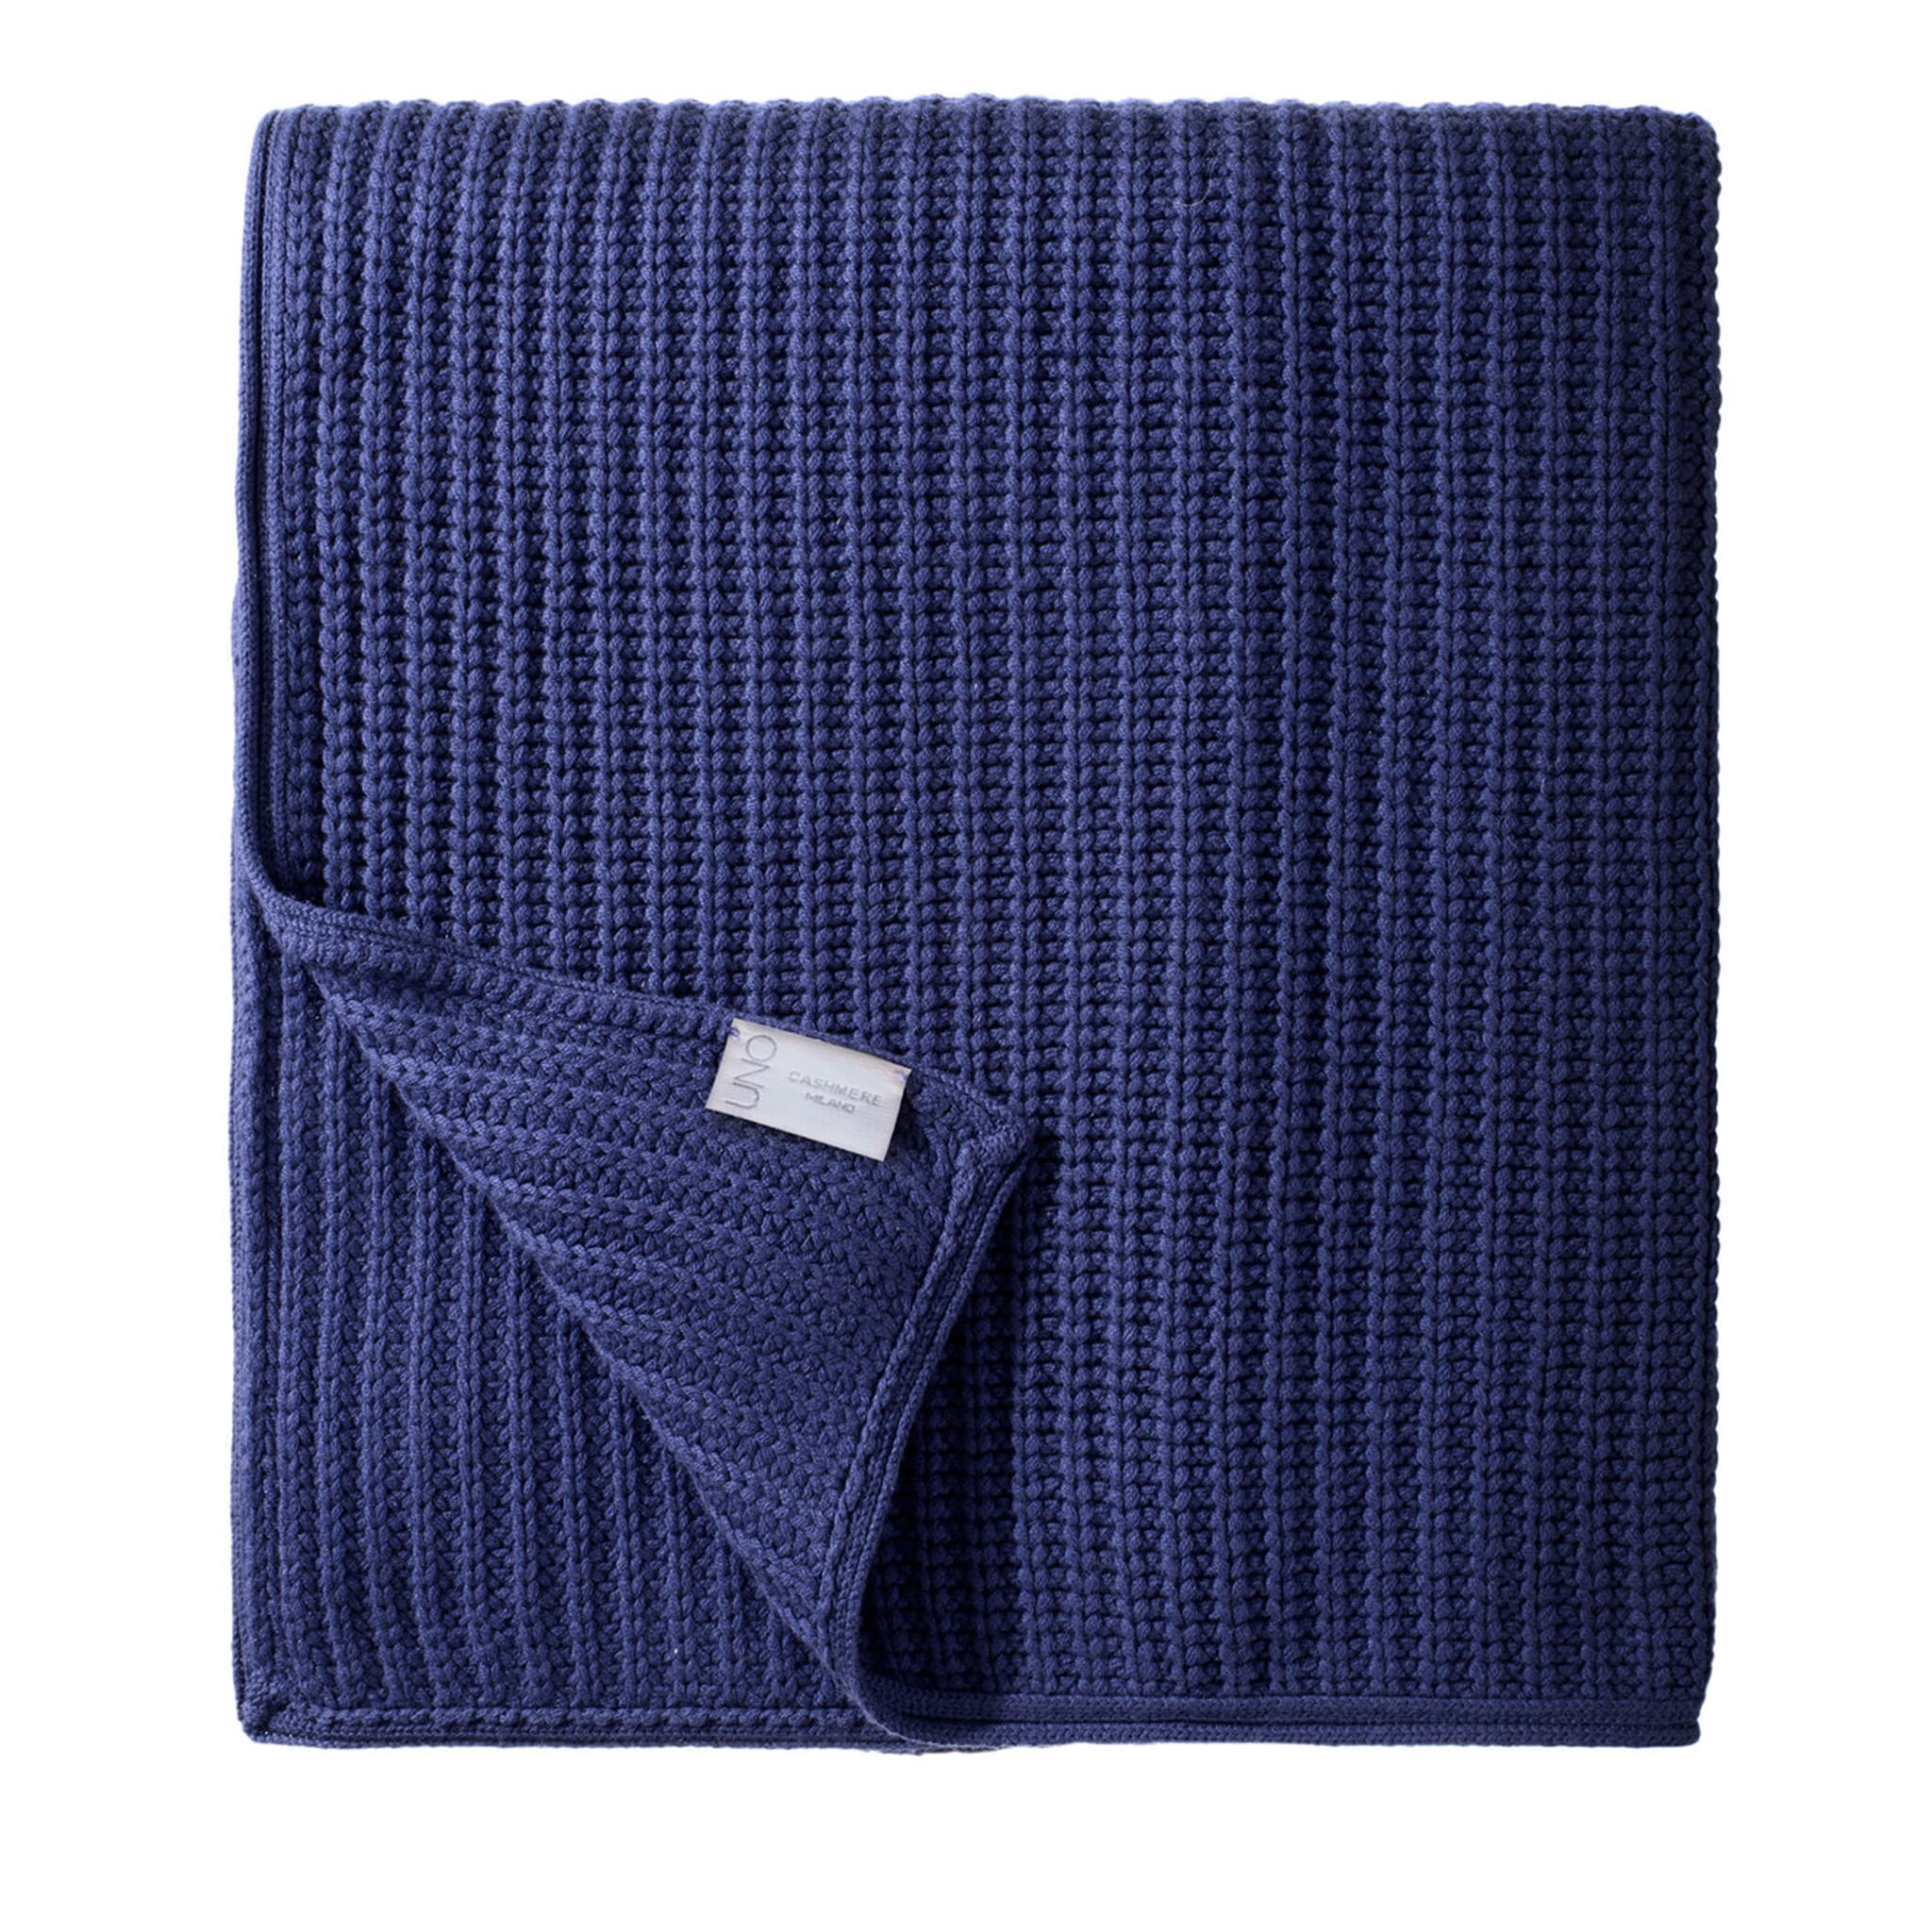 Large Blue Brioche Stitch Cashmere Blanket #1 - Main view